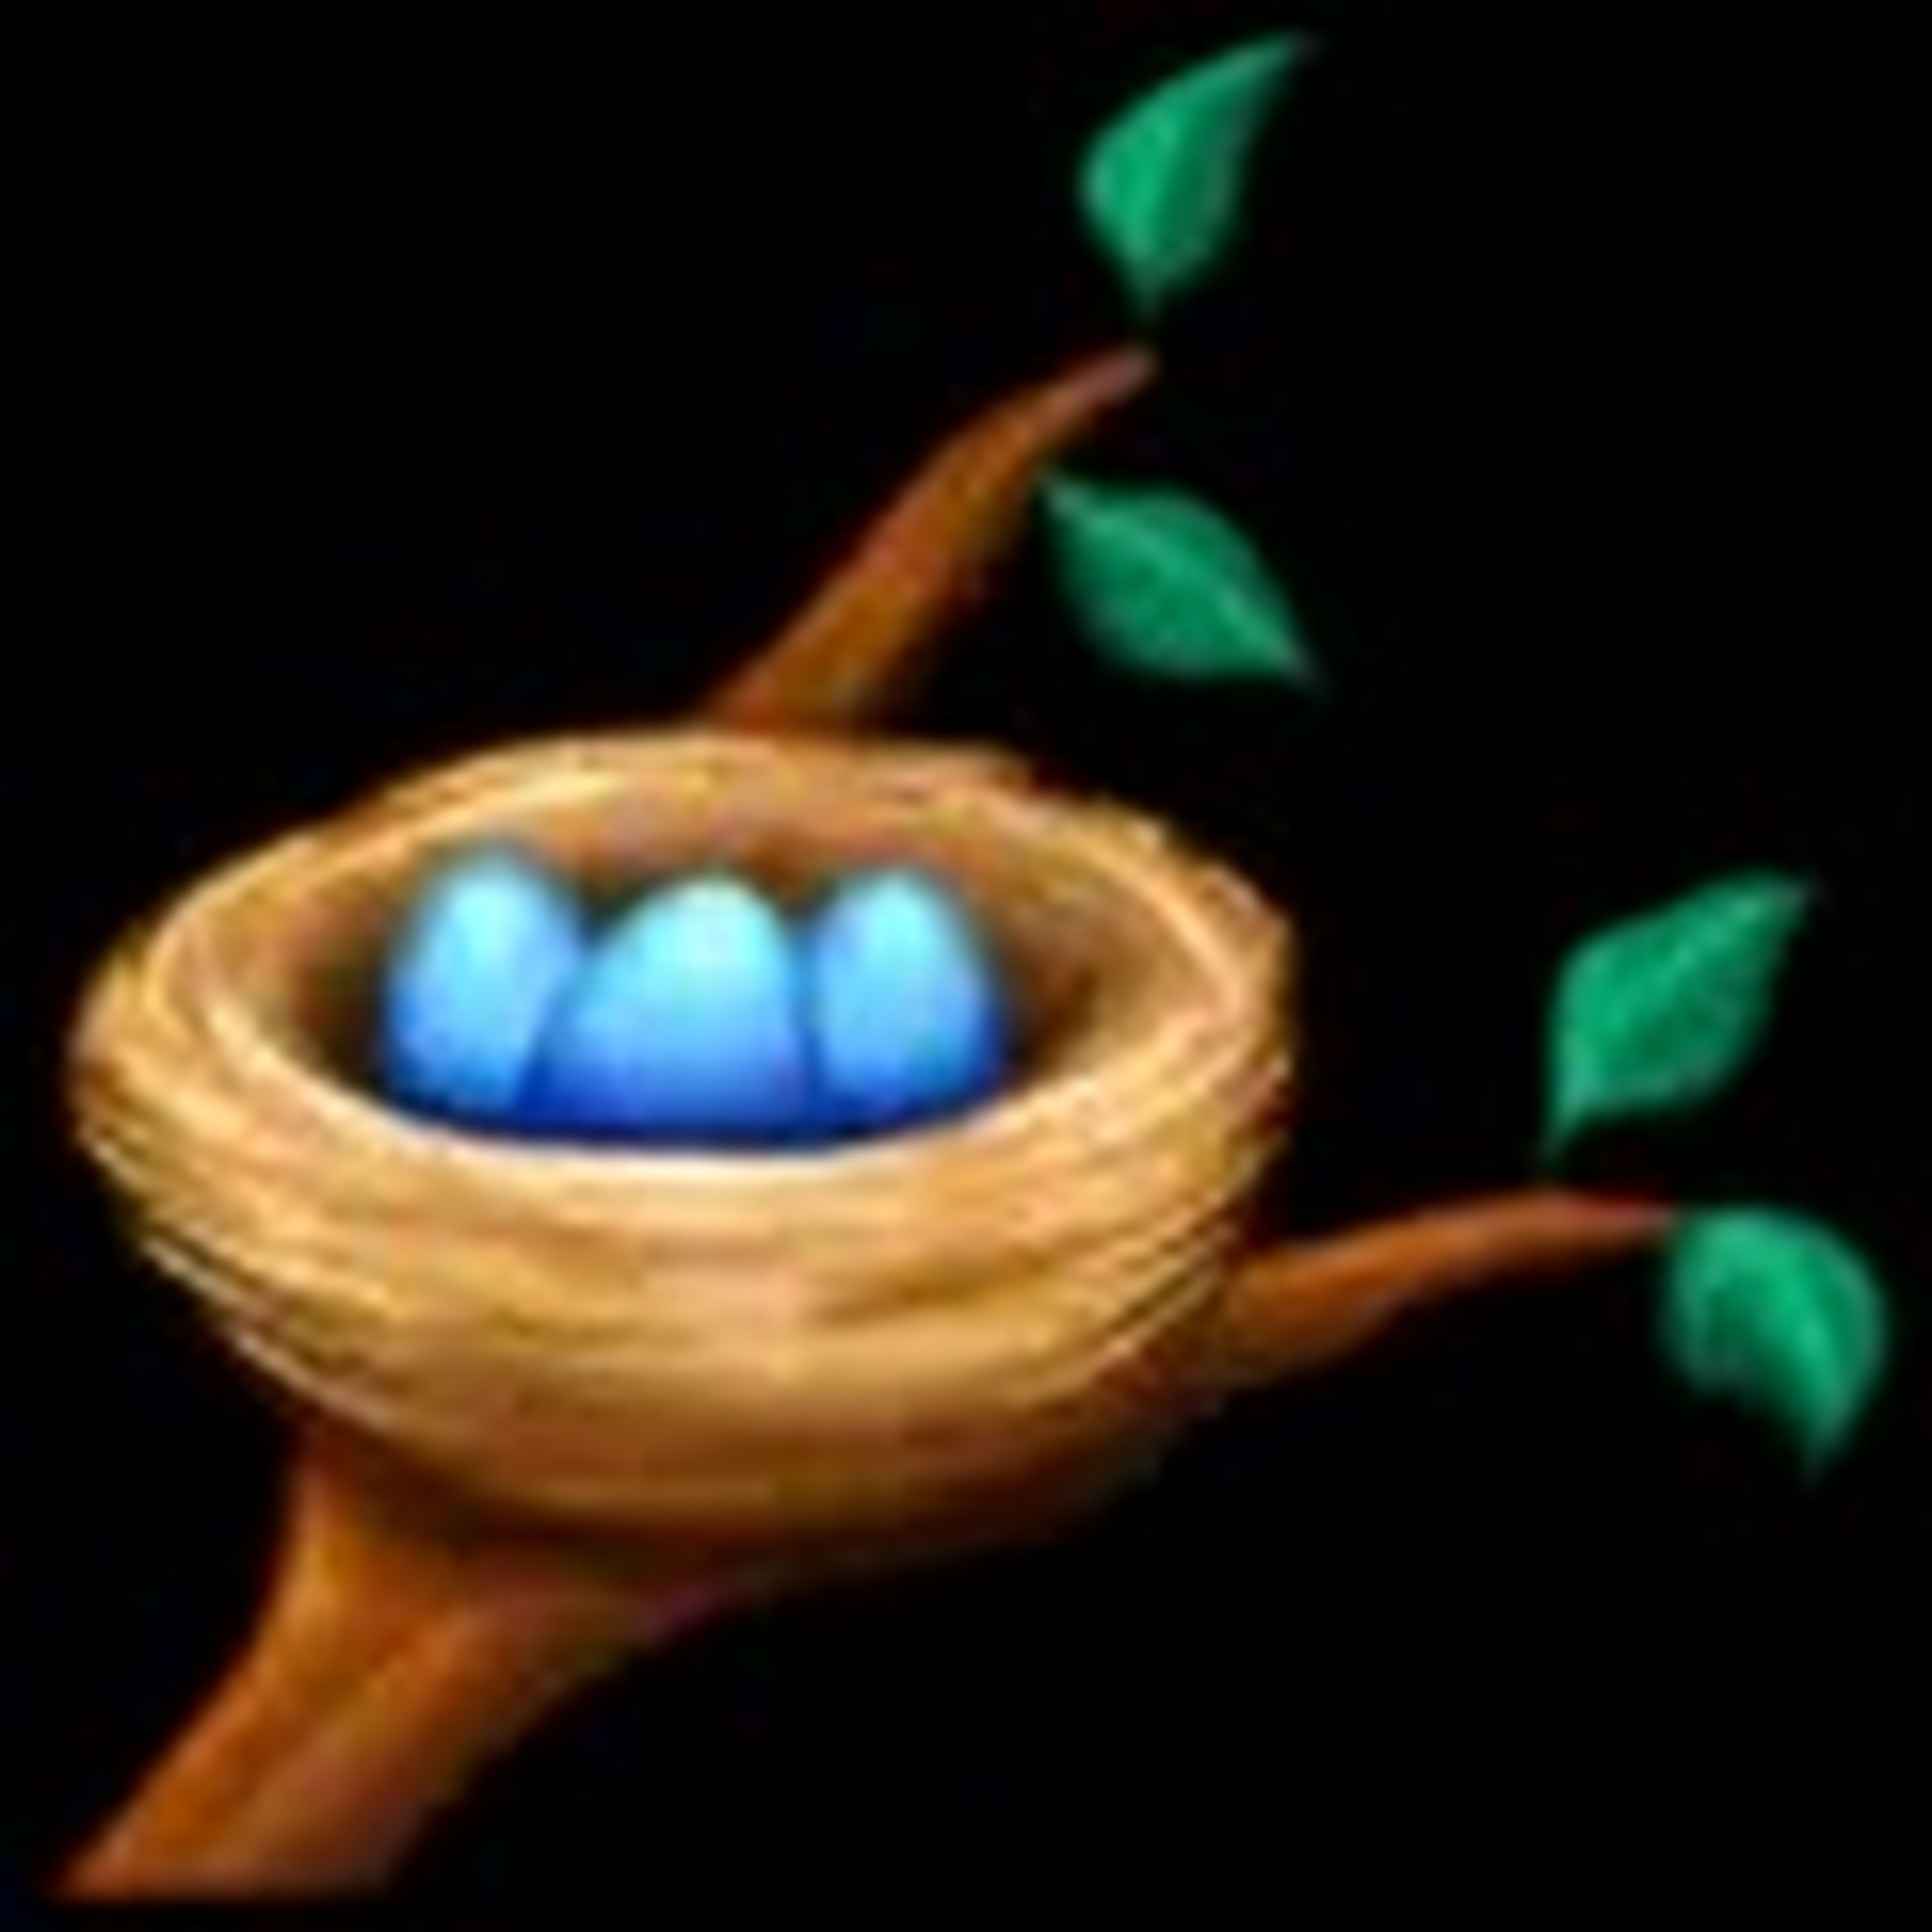 nest with eggs emoji